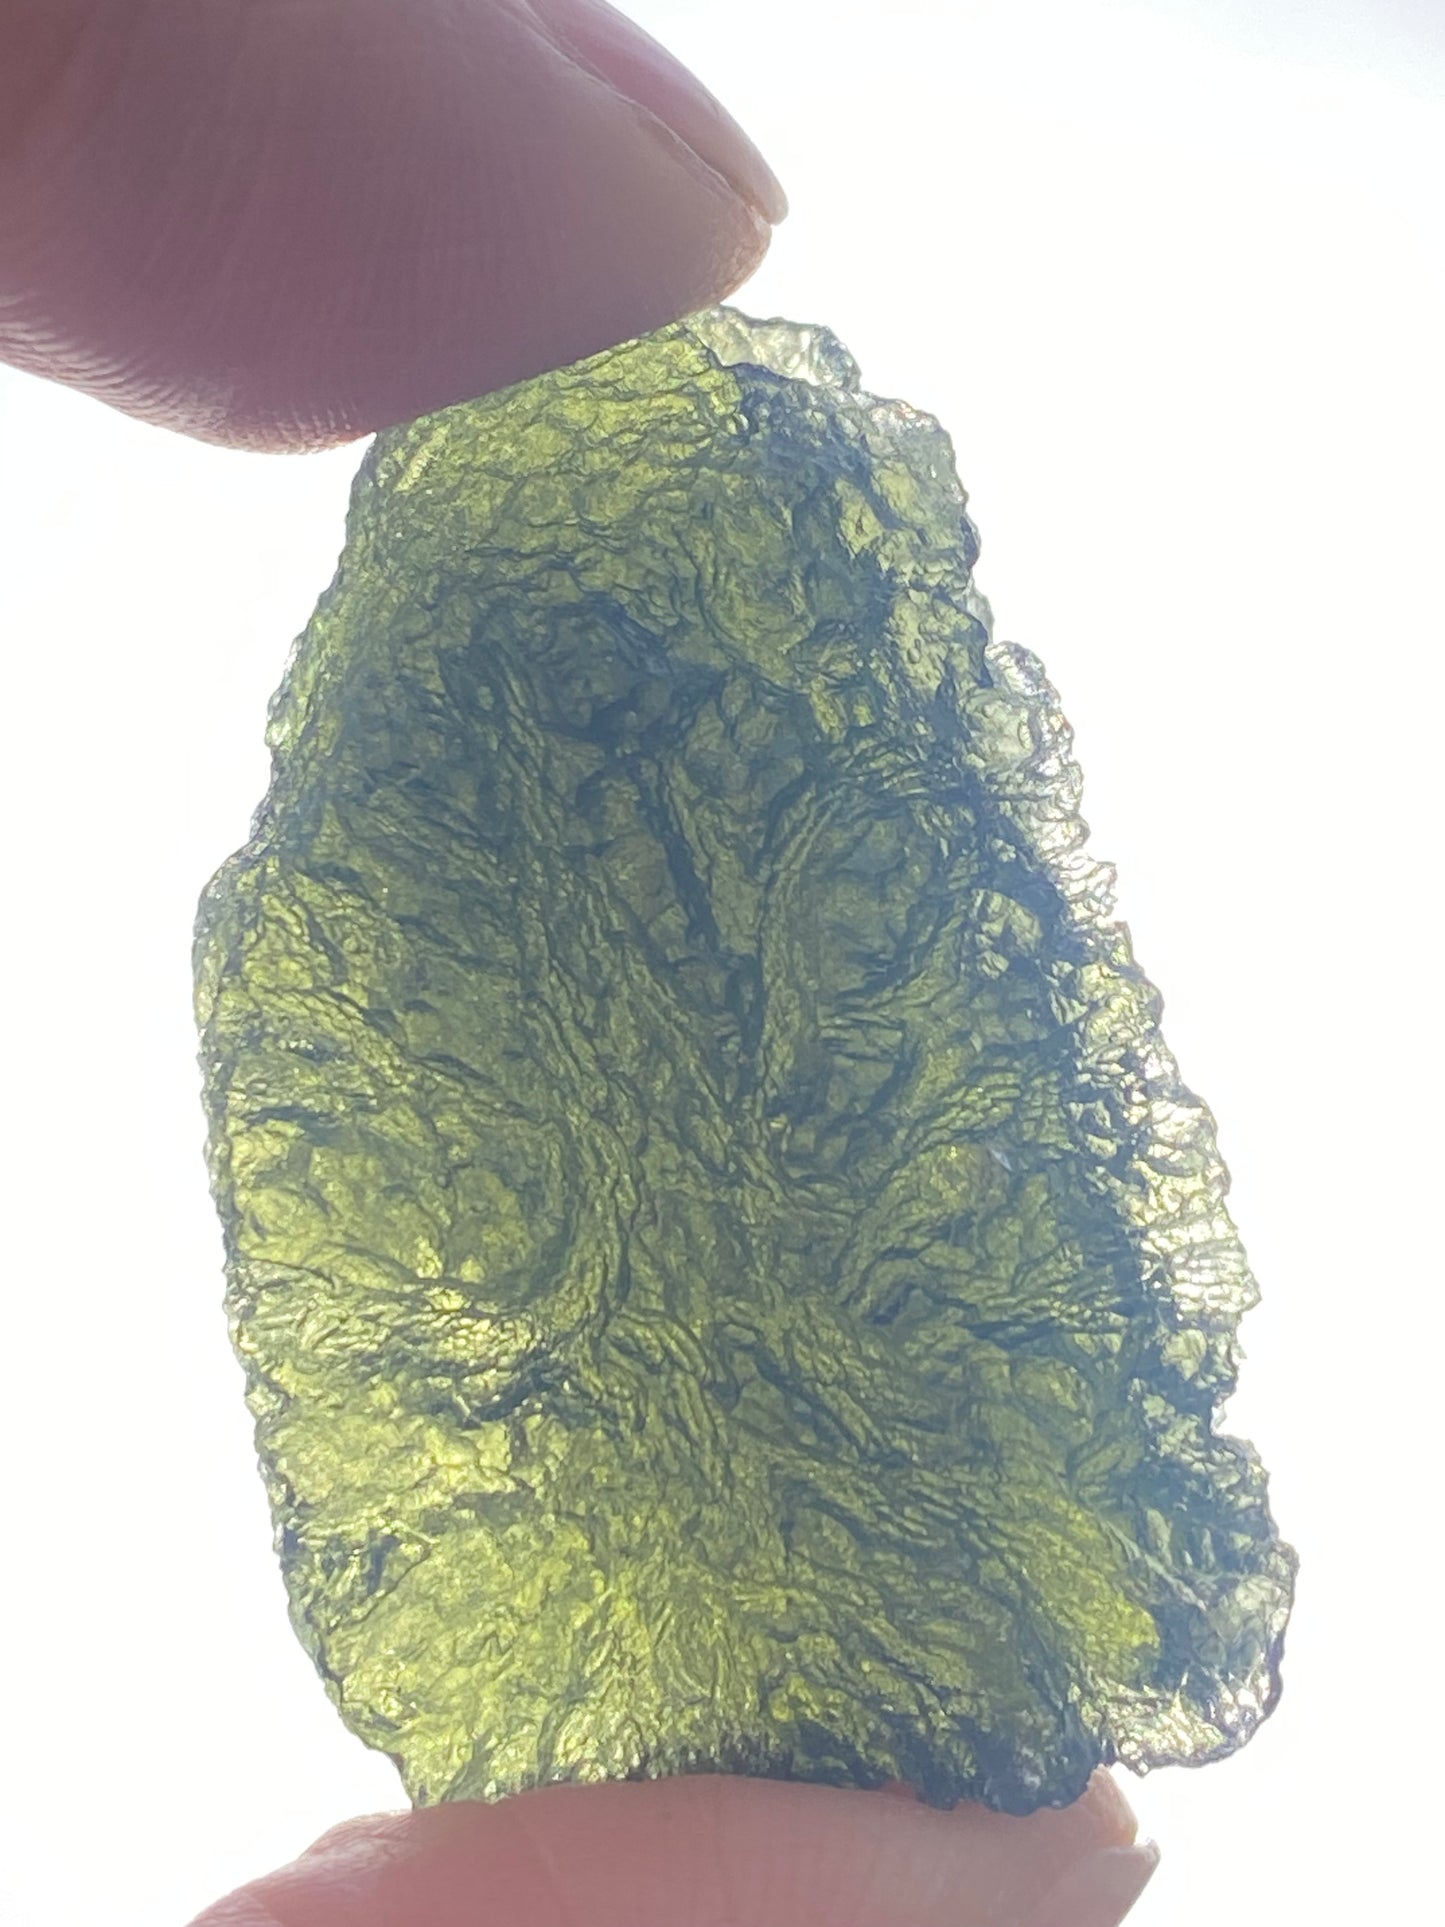 Rare Maly Chlum Moldavite Specimen with Air Bubble 10.2 grams